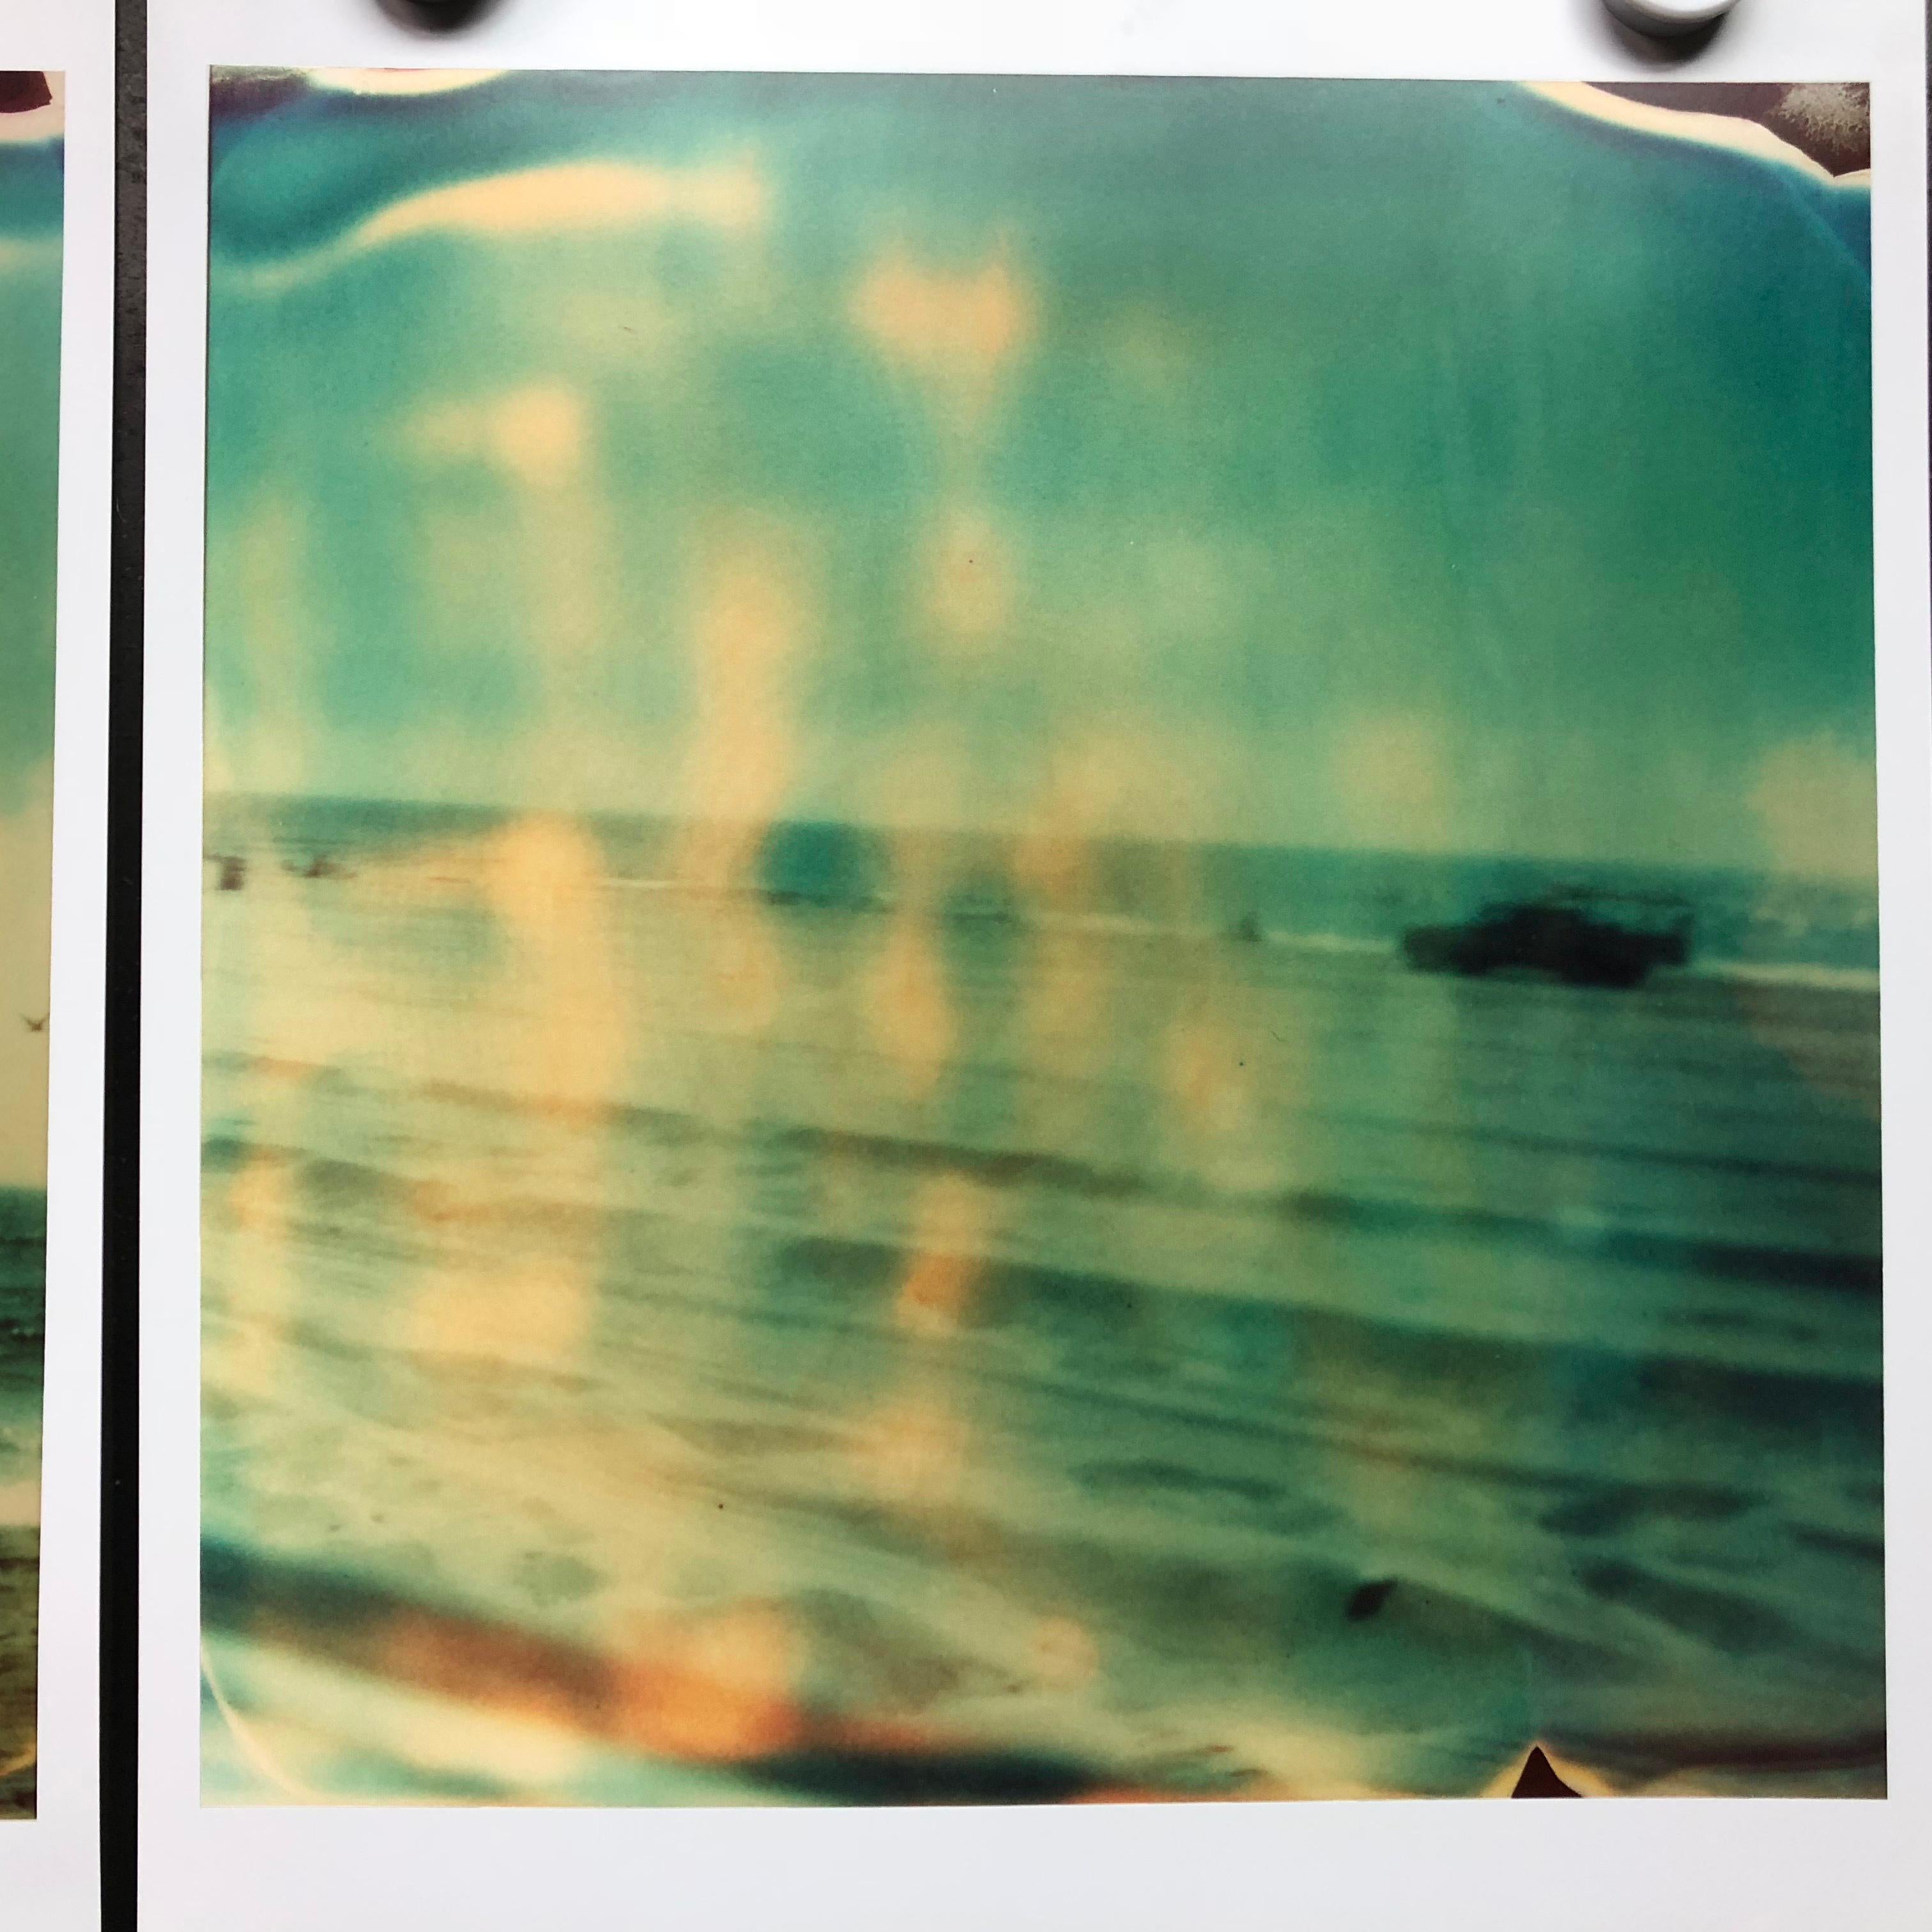 Lifeguard (Malibu) - Contemporary, Landscape, expired, Polaroid, analog - Green Color Photograph by Stefanie Schneider